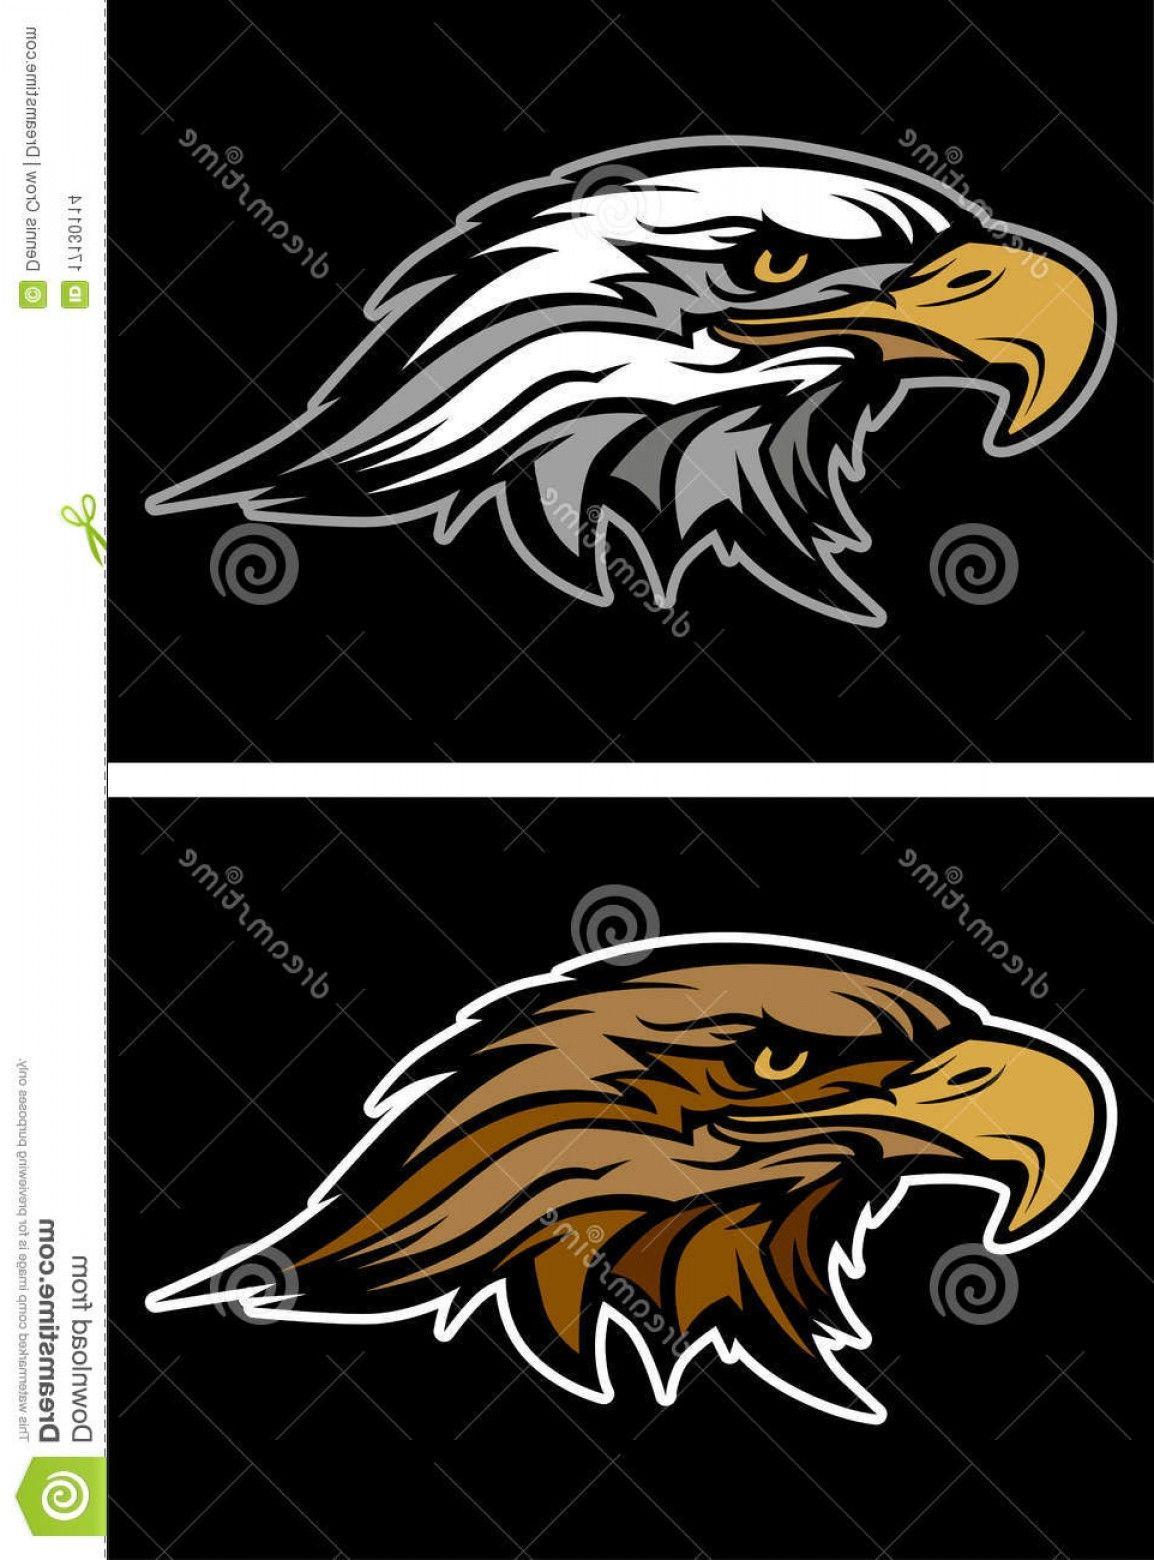 Hawk Vector Logo - Stock Image Eagle Hawk Head Mascot Vector Logo Image